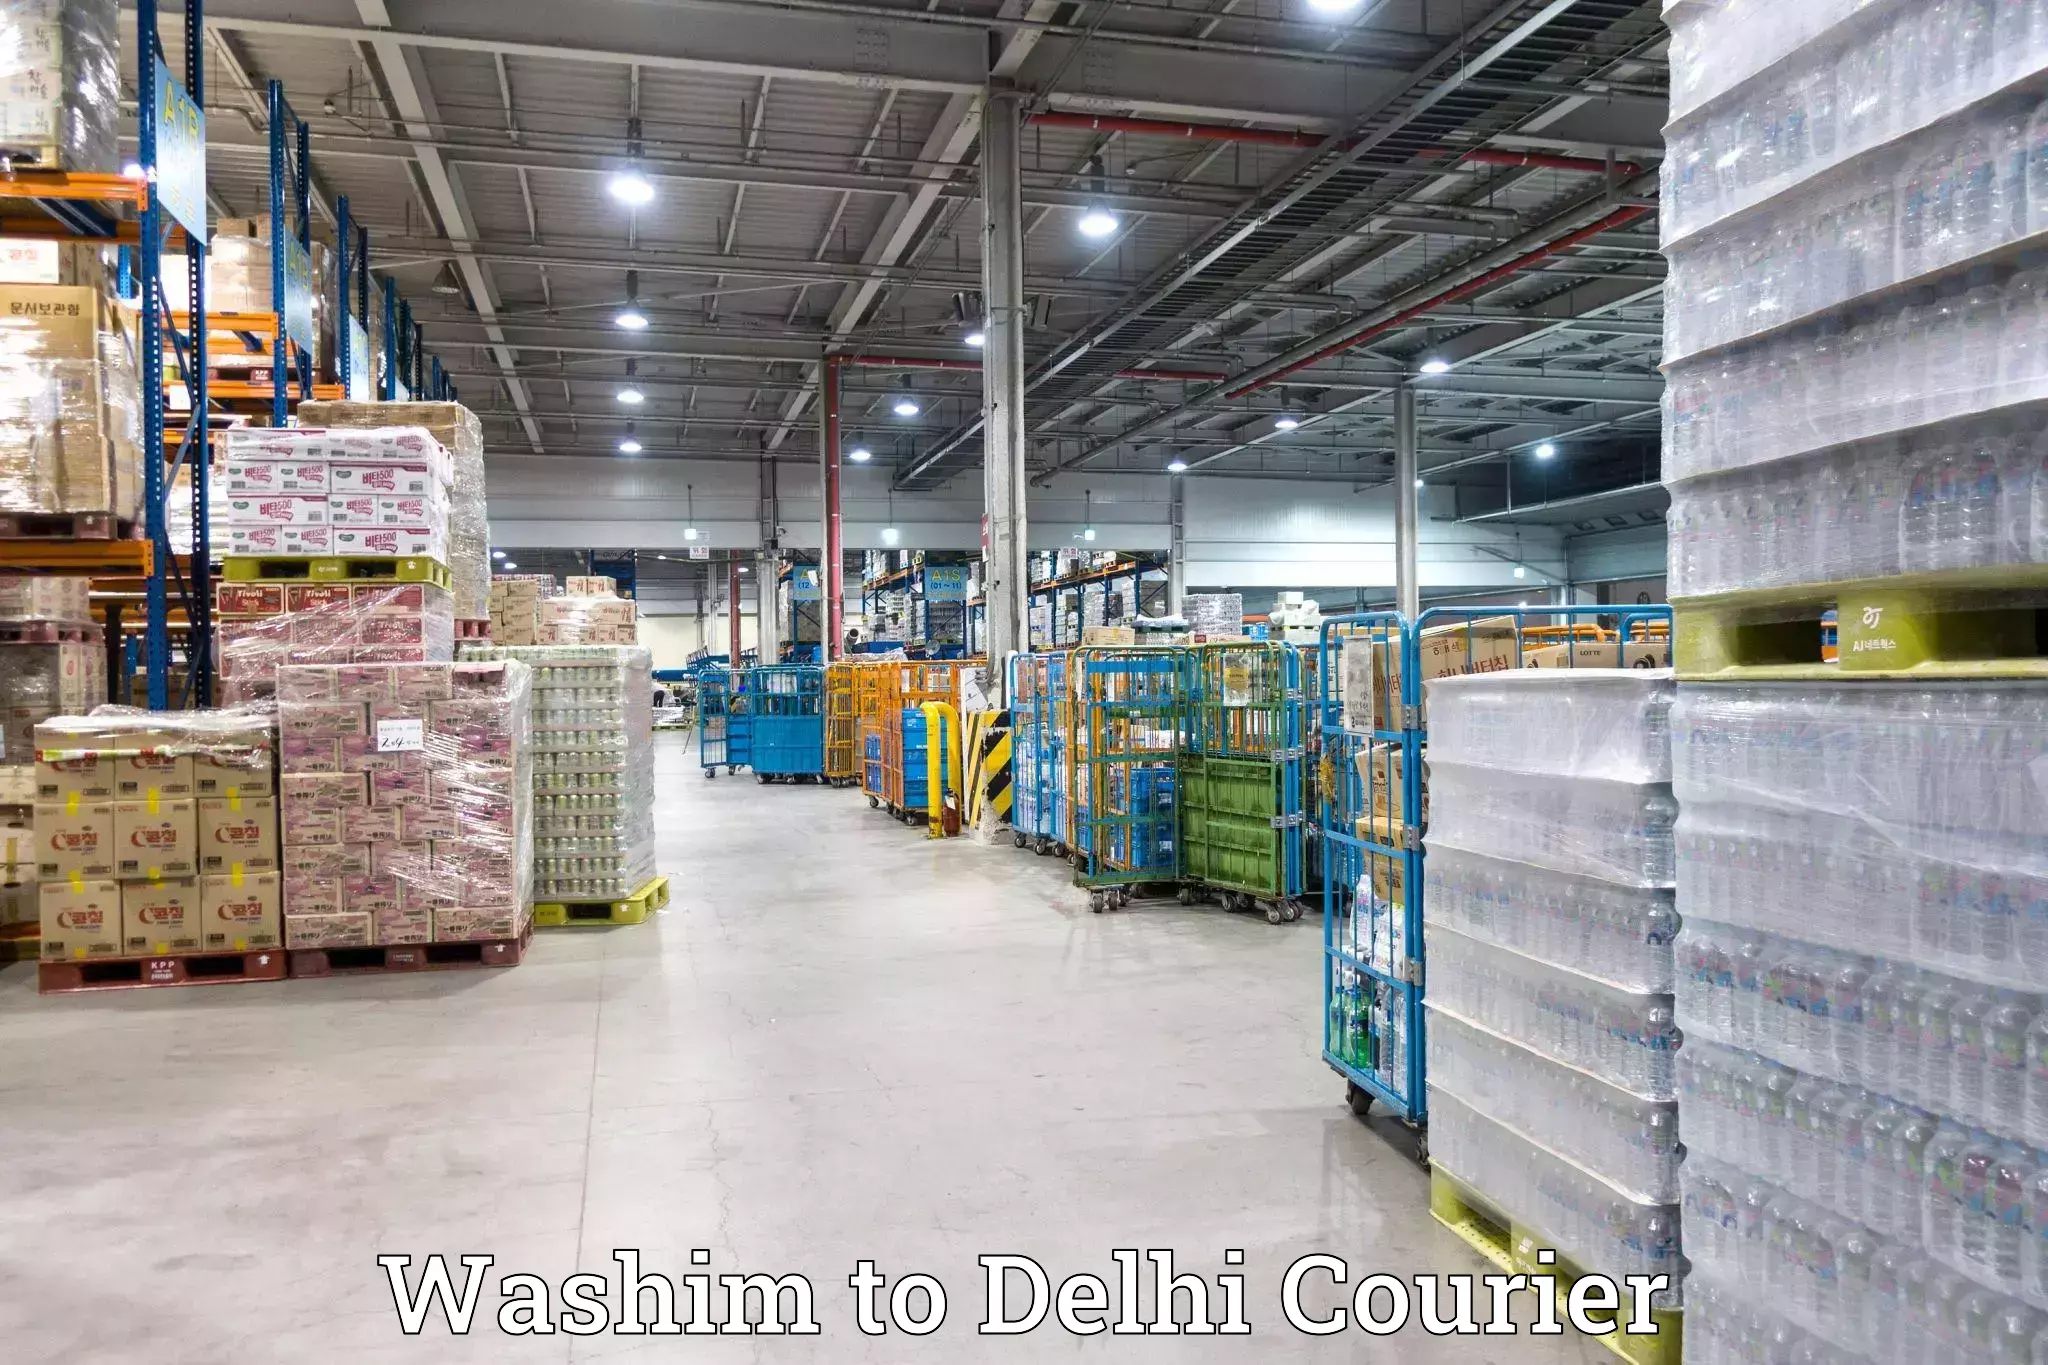 Professional moving company Washim to Delhi